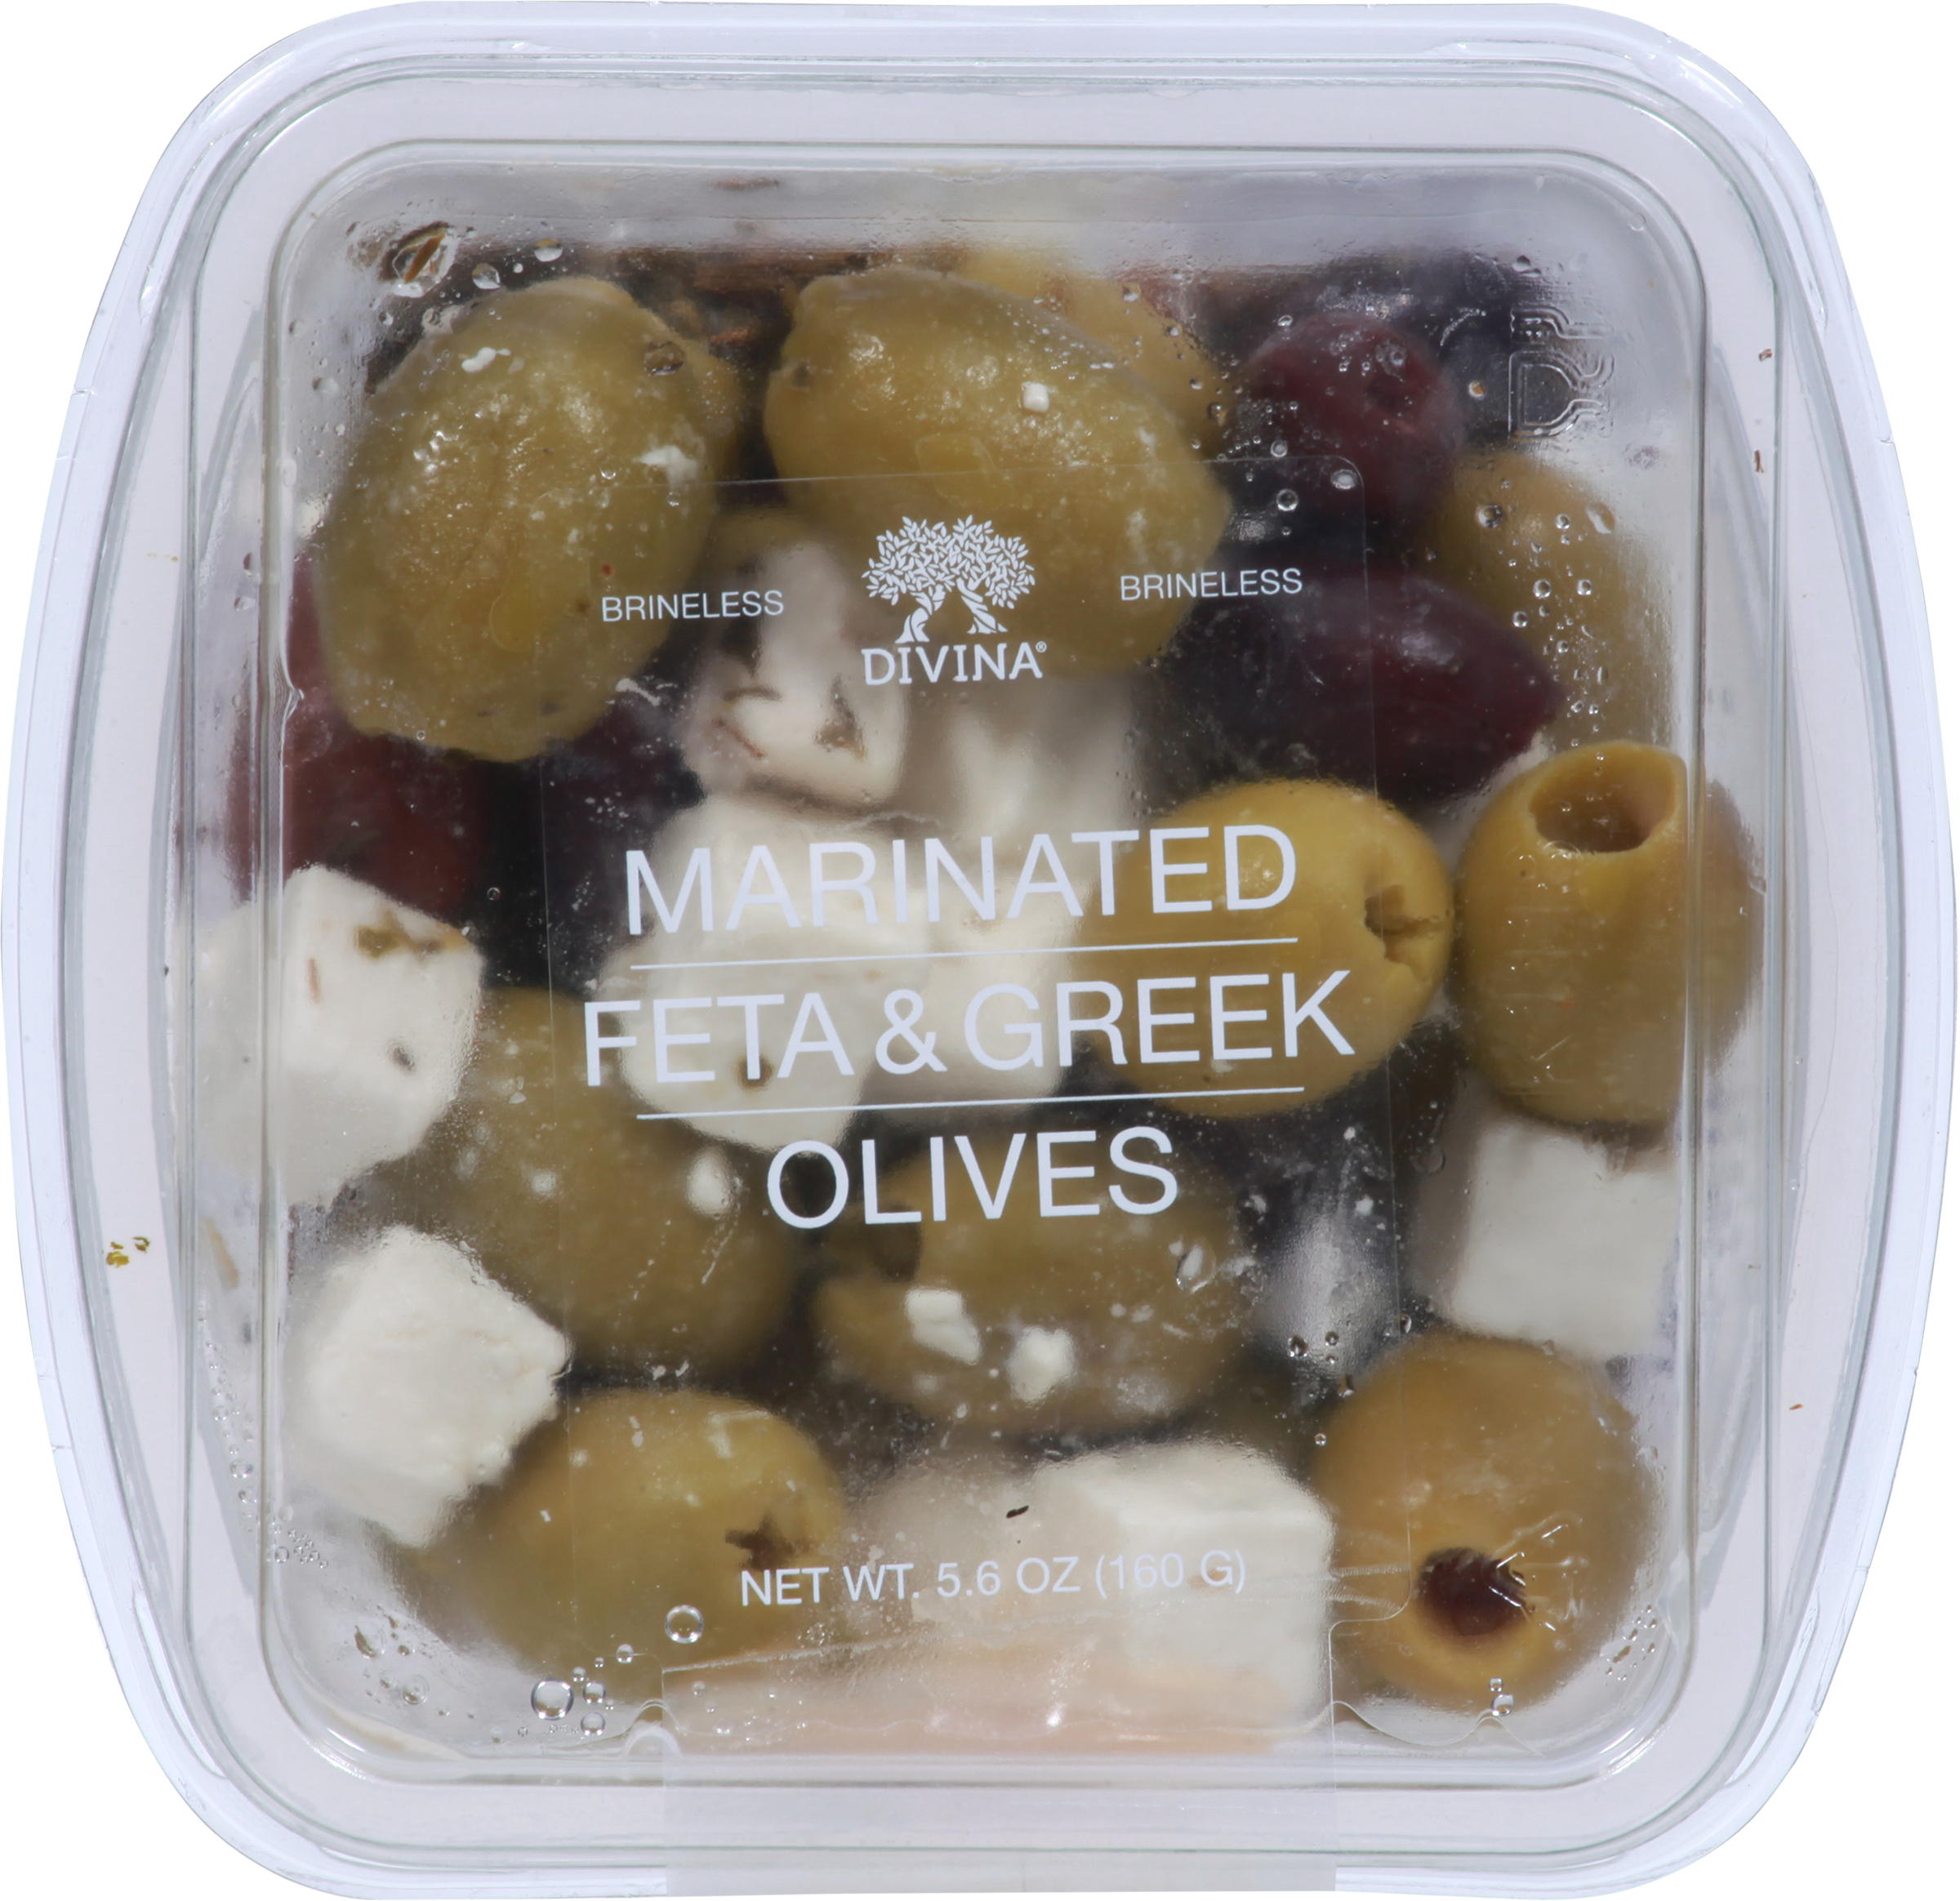 Olives, Feta & Greek, Marinated